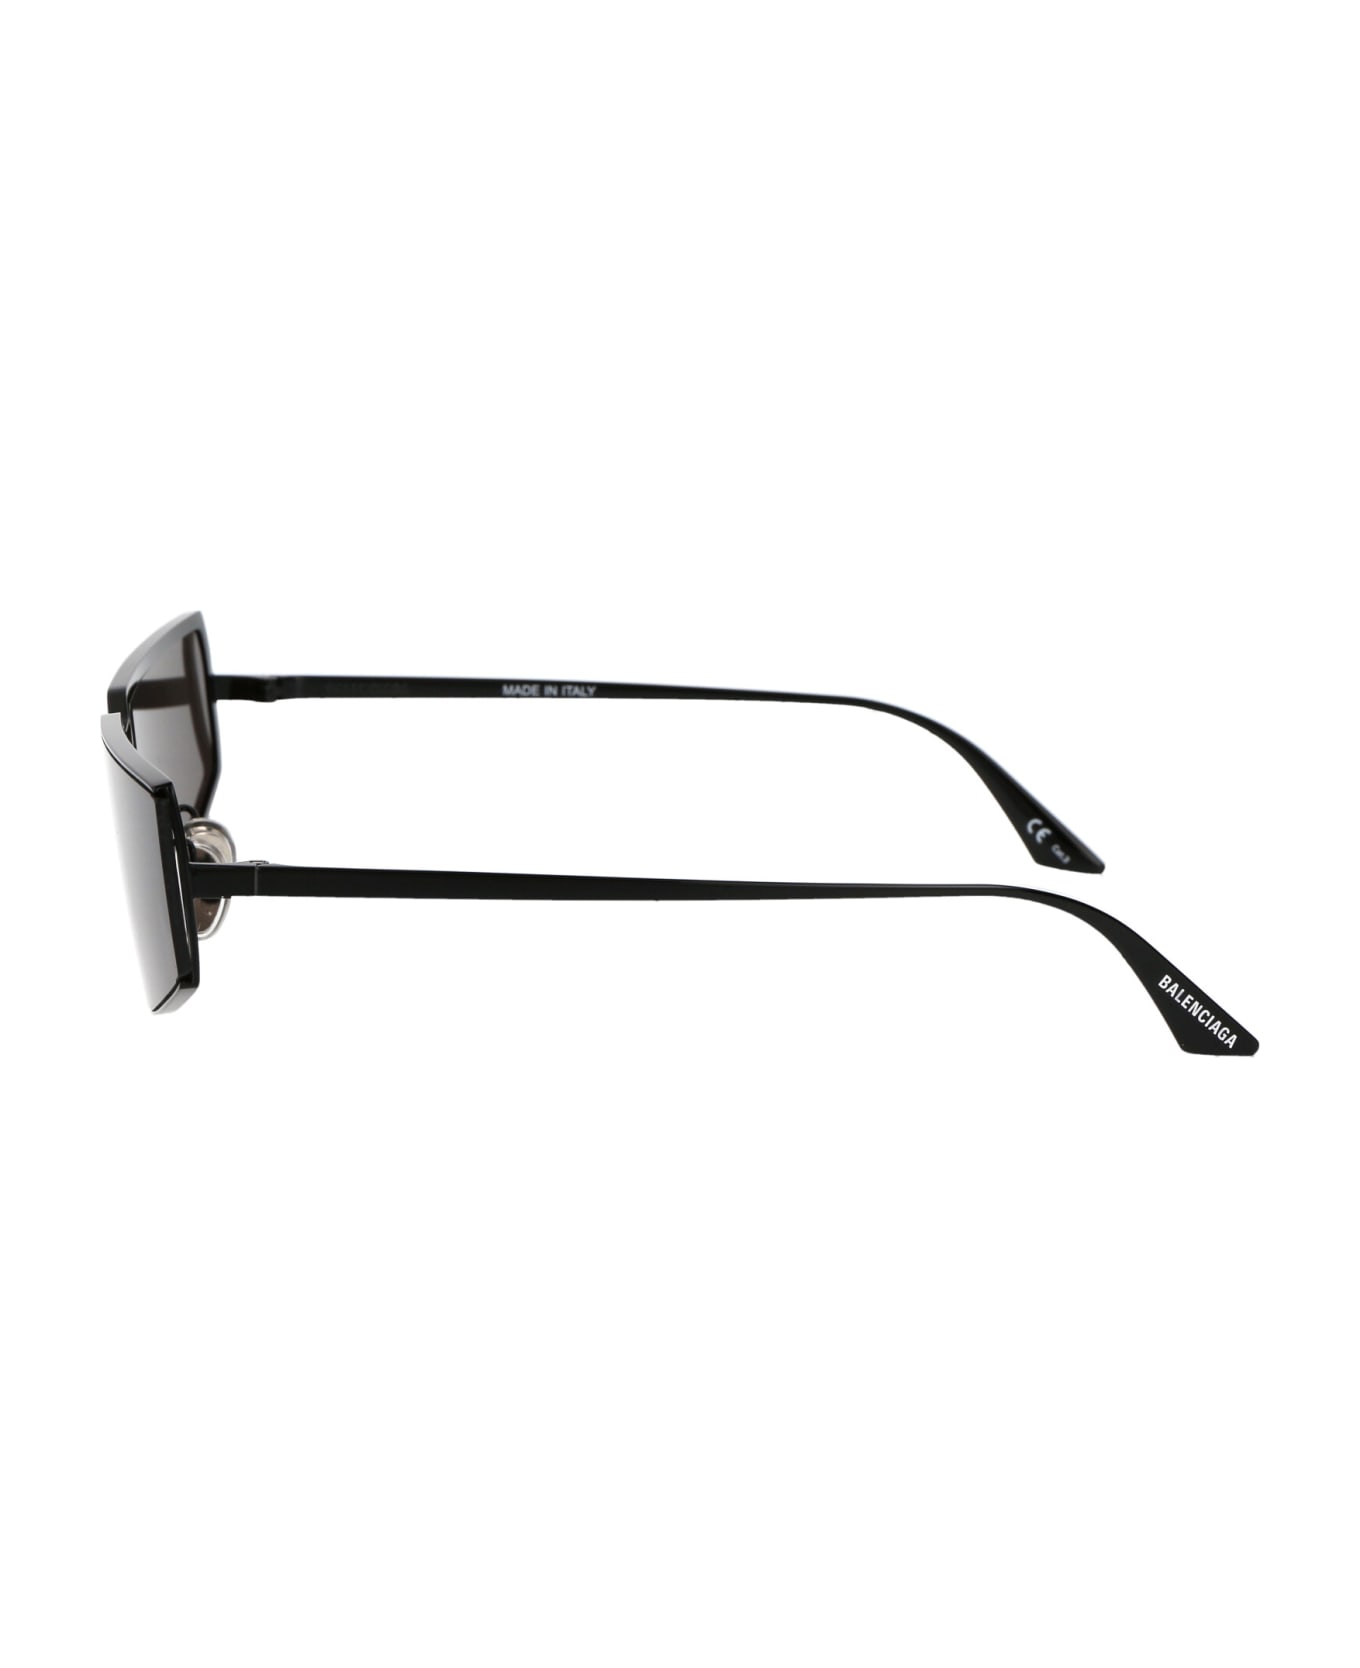 Balenciaga Eyewear Bb0192s Sunglasses - 001 BLACK BLACK GREY